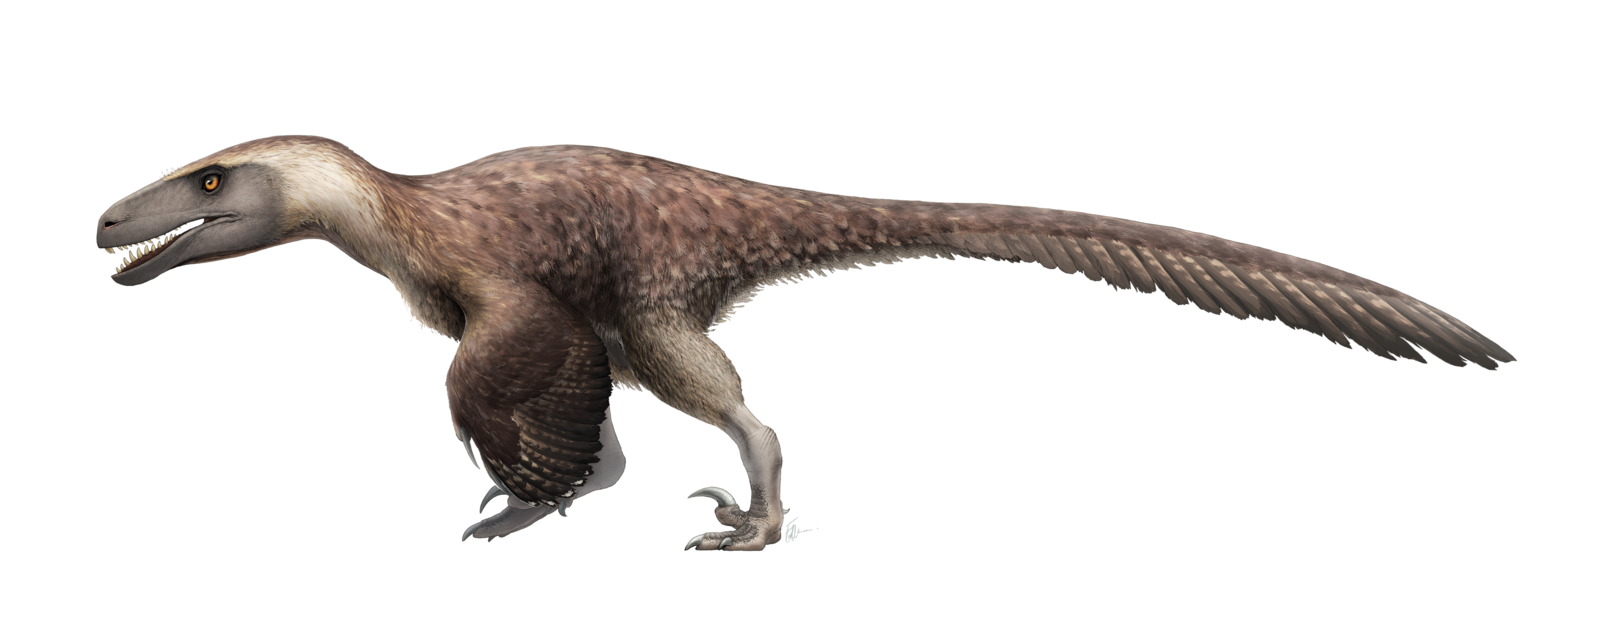 Three New Raptor Dinosaurs Discovered in Utah, Paleontology